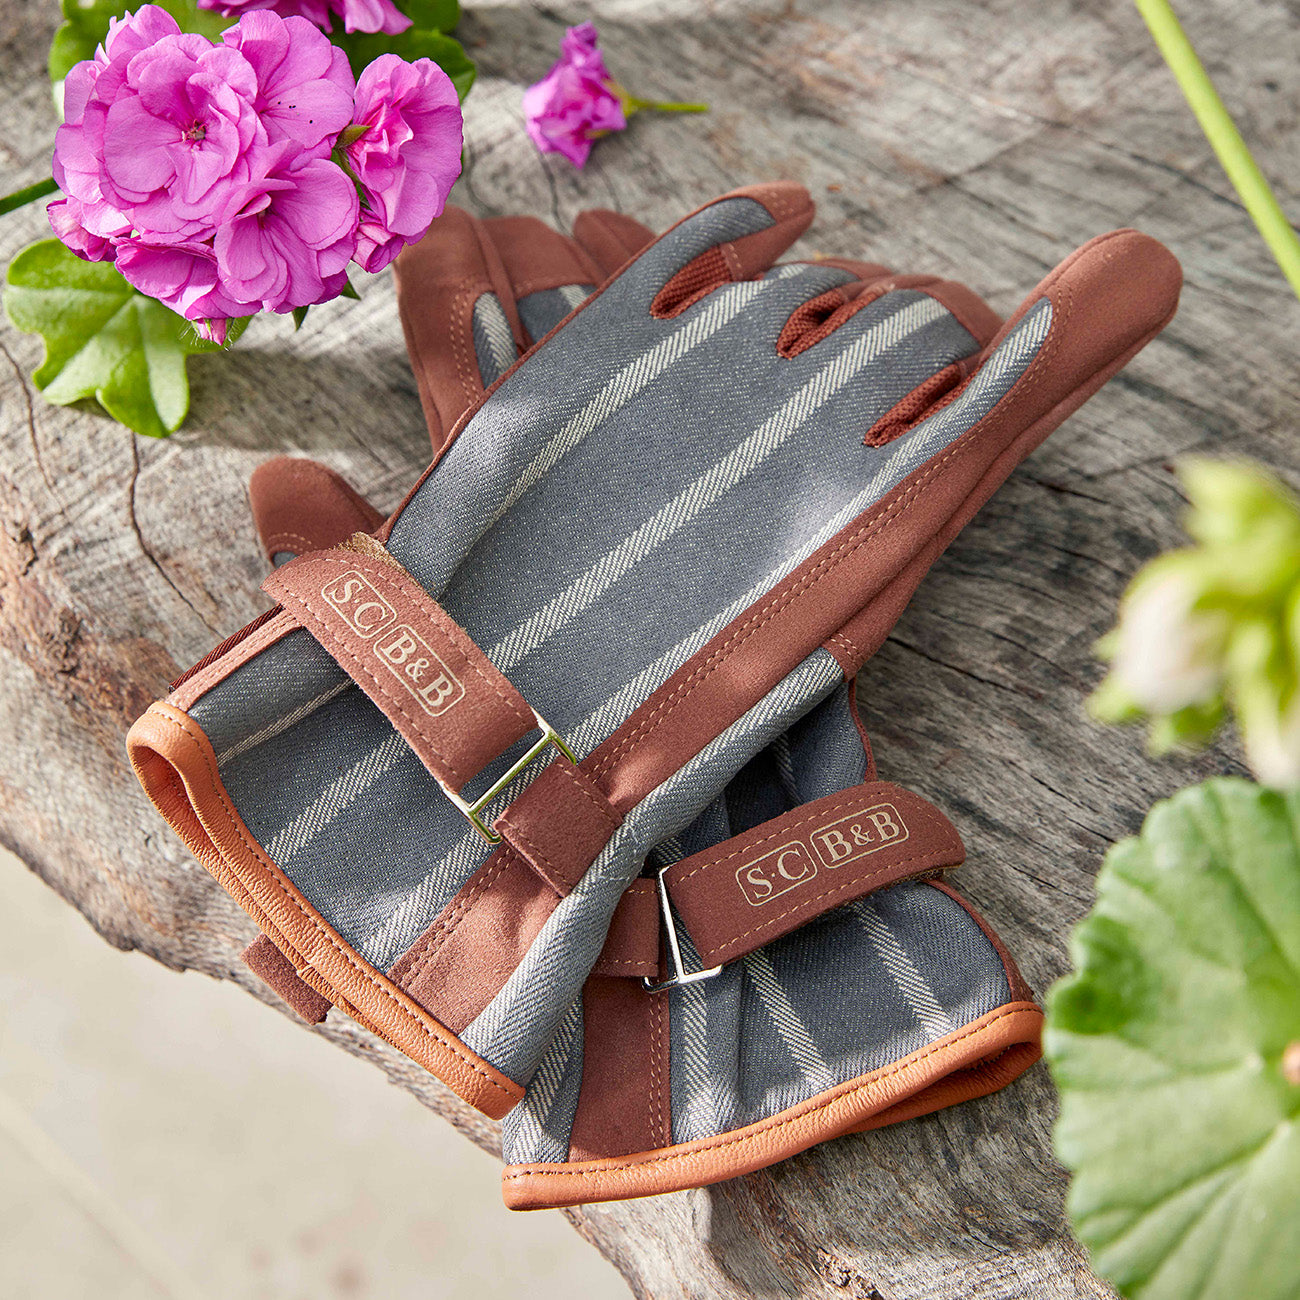 Sophie Conran for Burgon & Ball Everyday Gardening Gloves in grey ticking stripe placed on a garden bench.